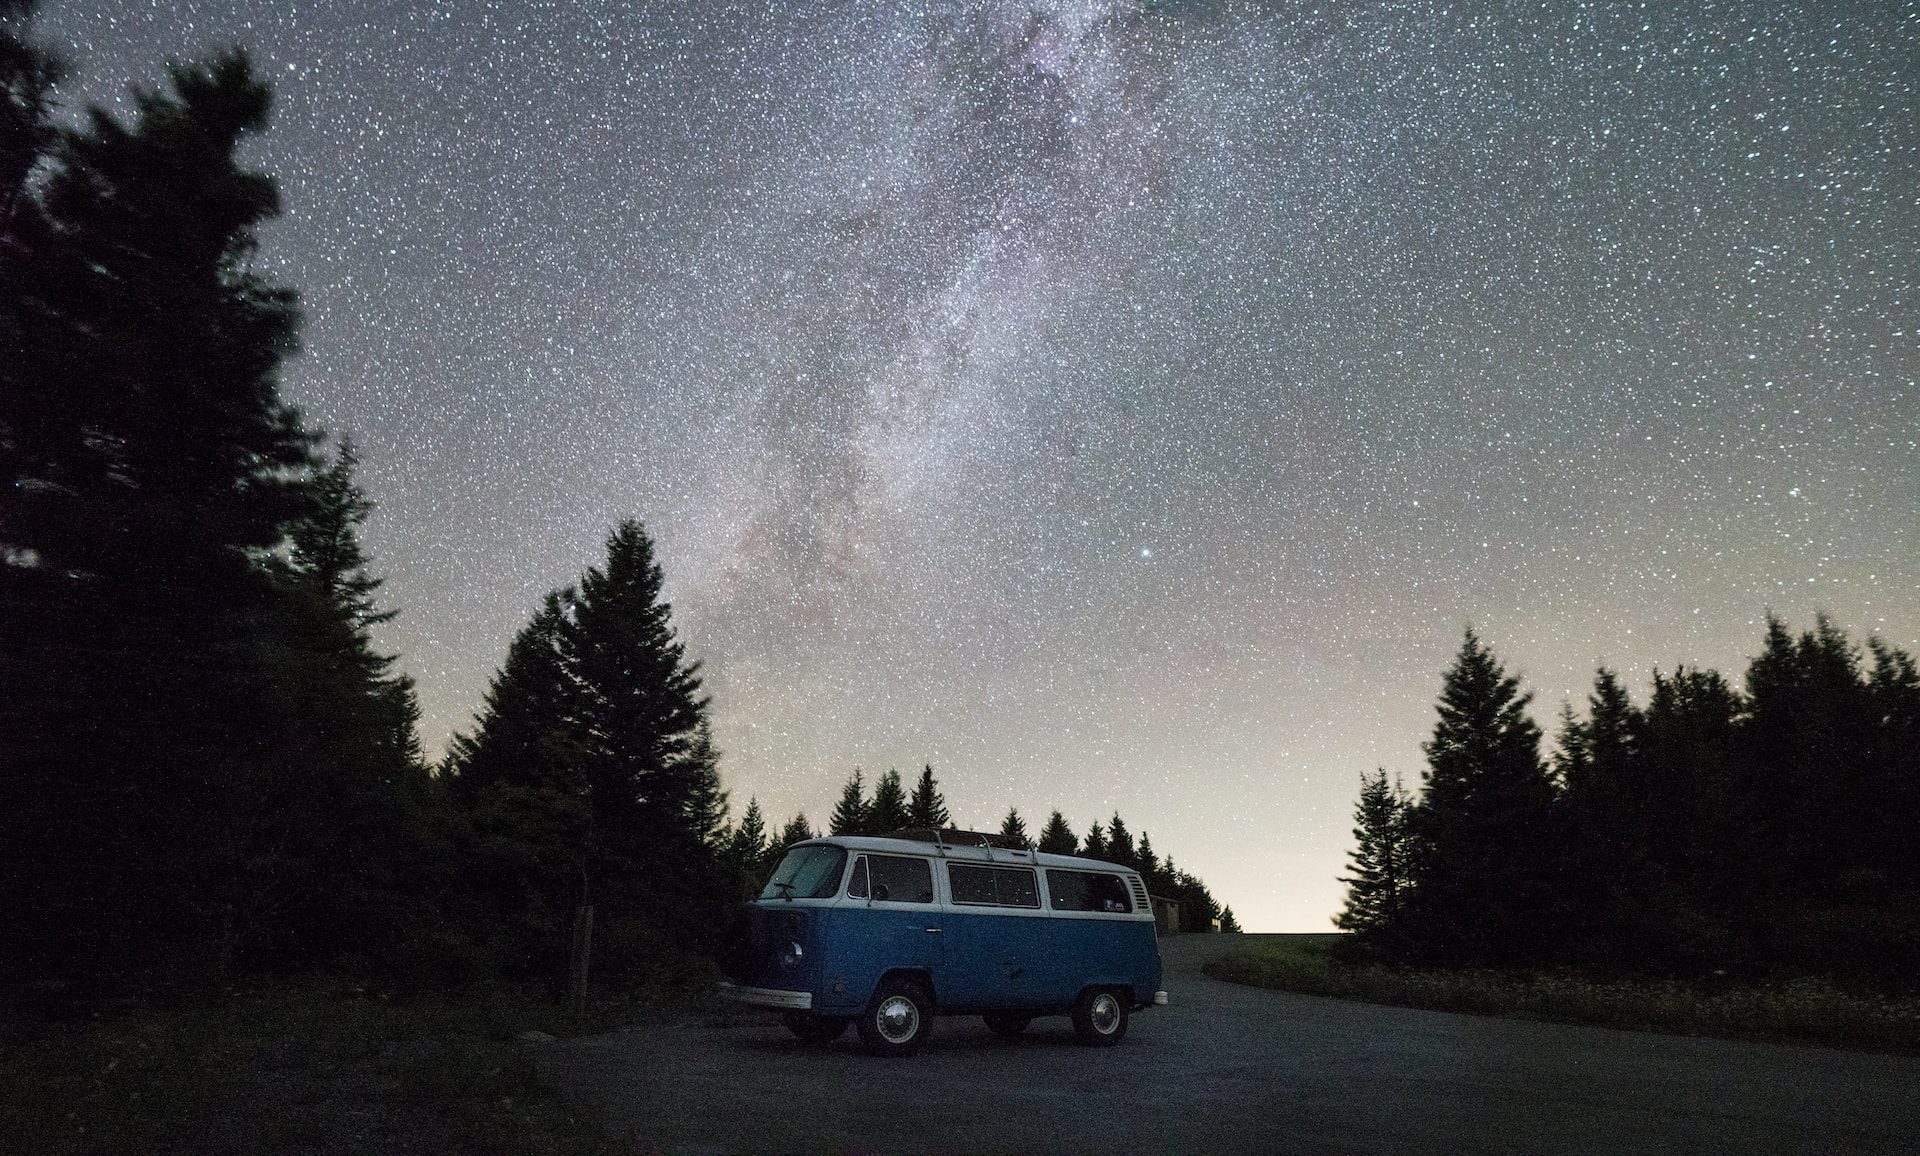 VW Van under early morning starlight in Parkersburg, West Virginia